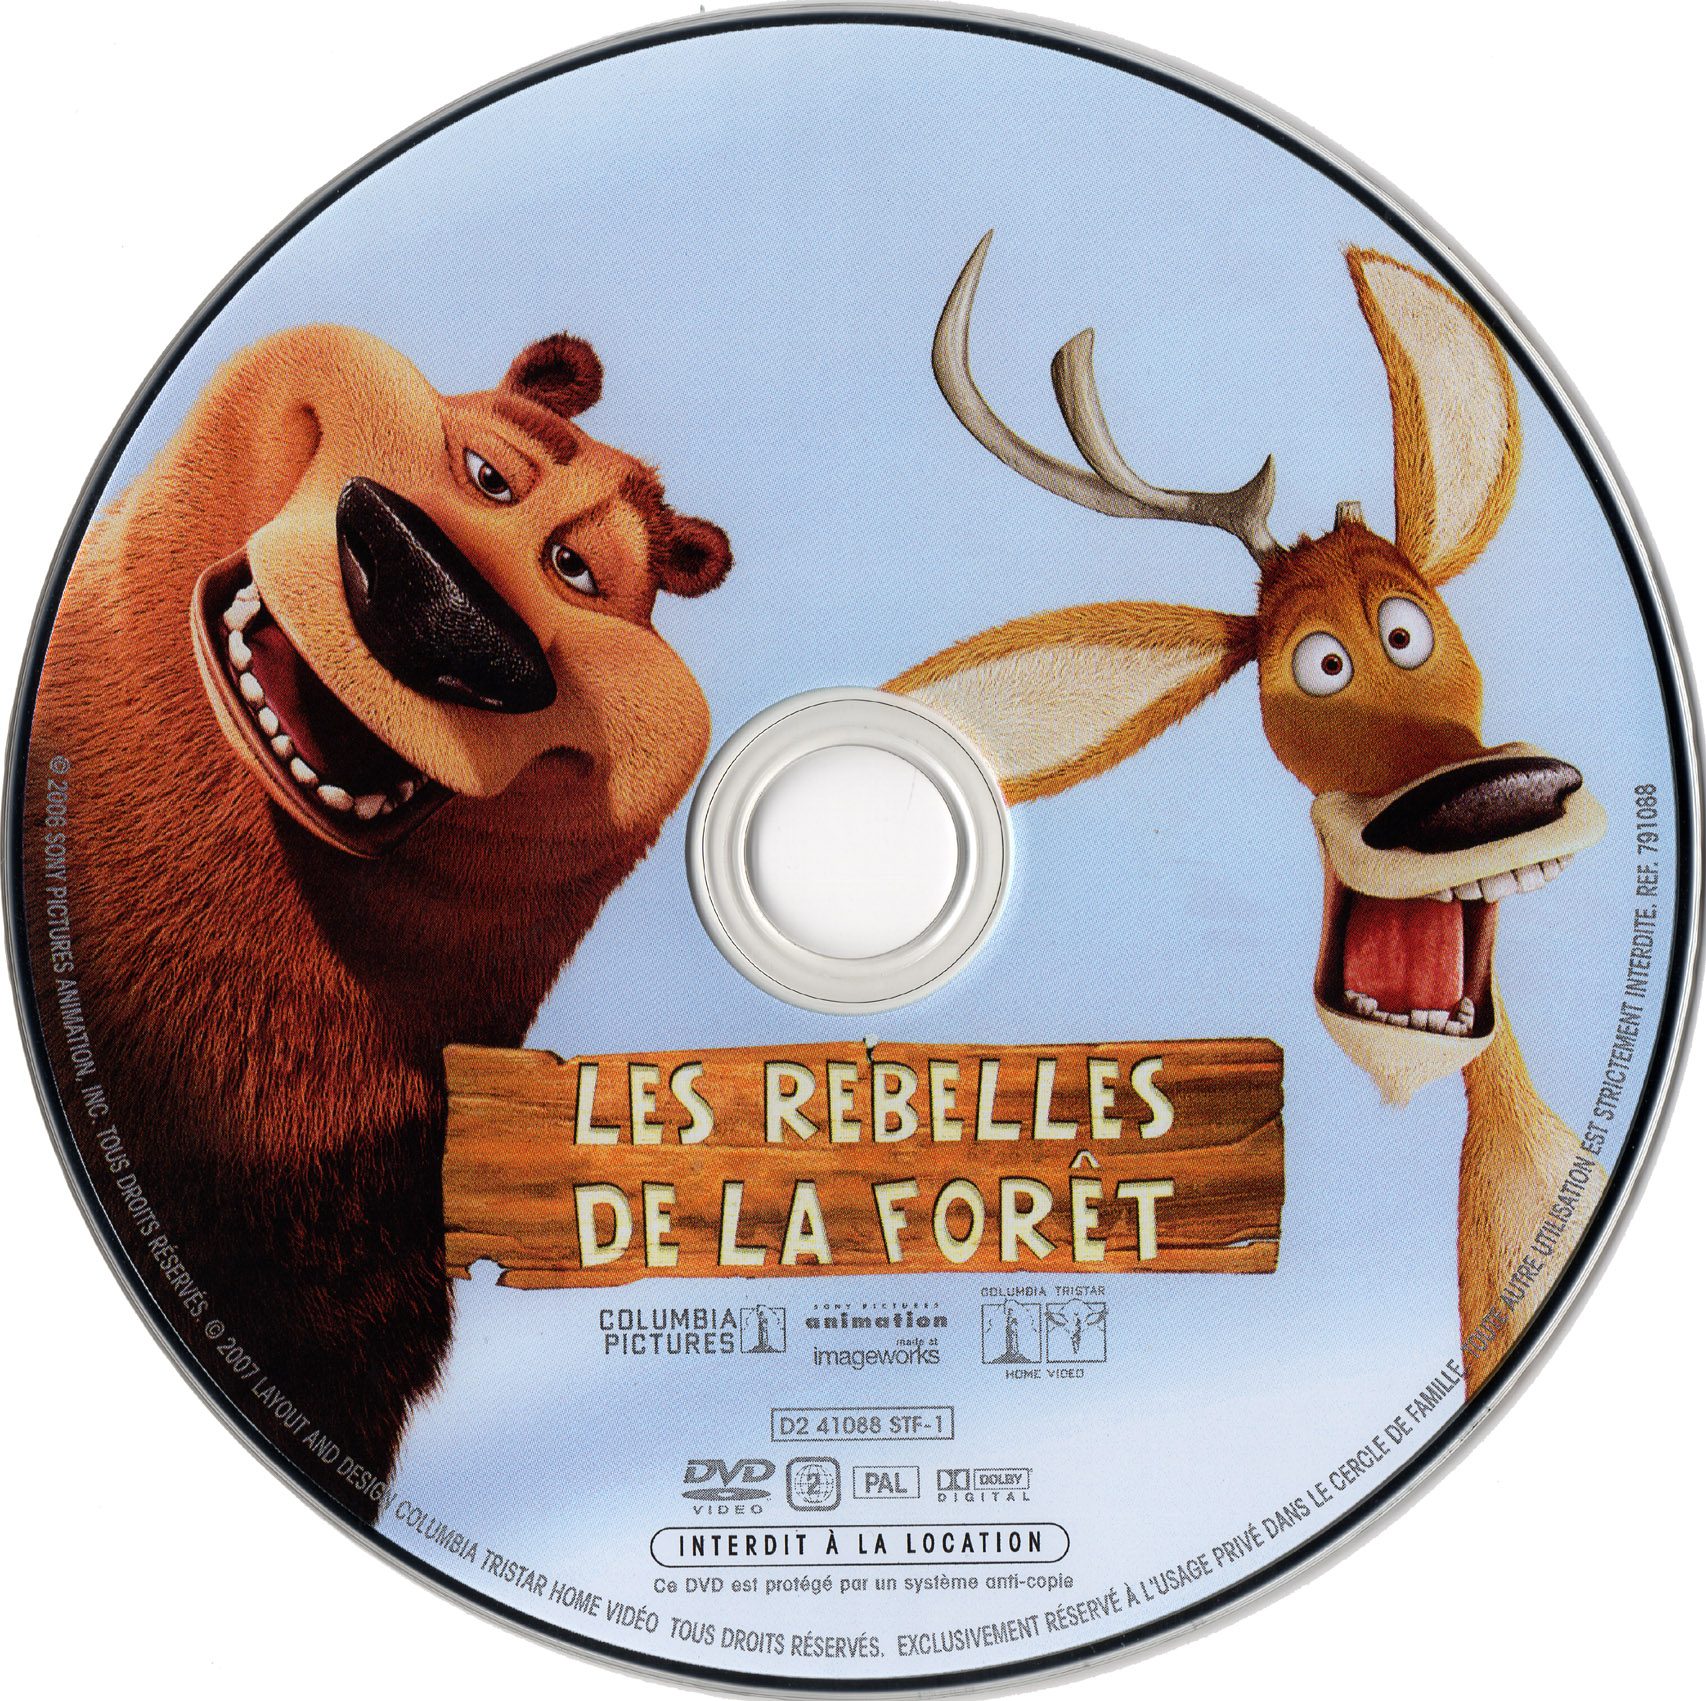 Les rebelles de la foret DISC 1